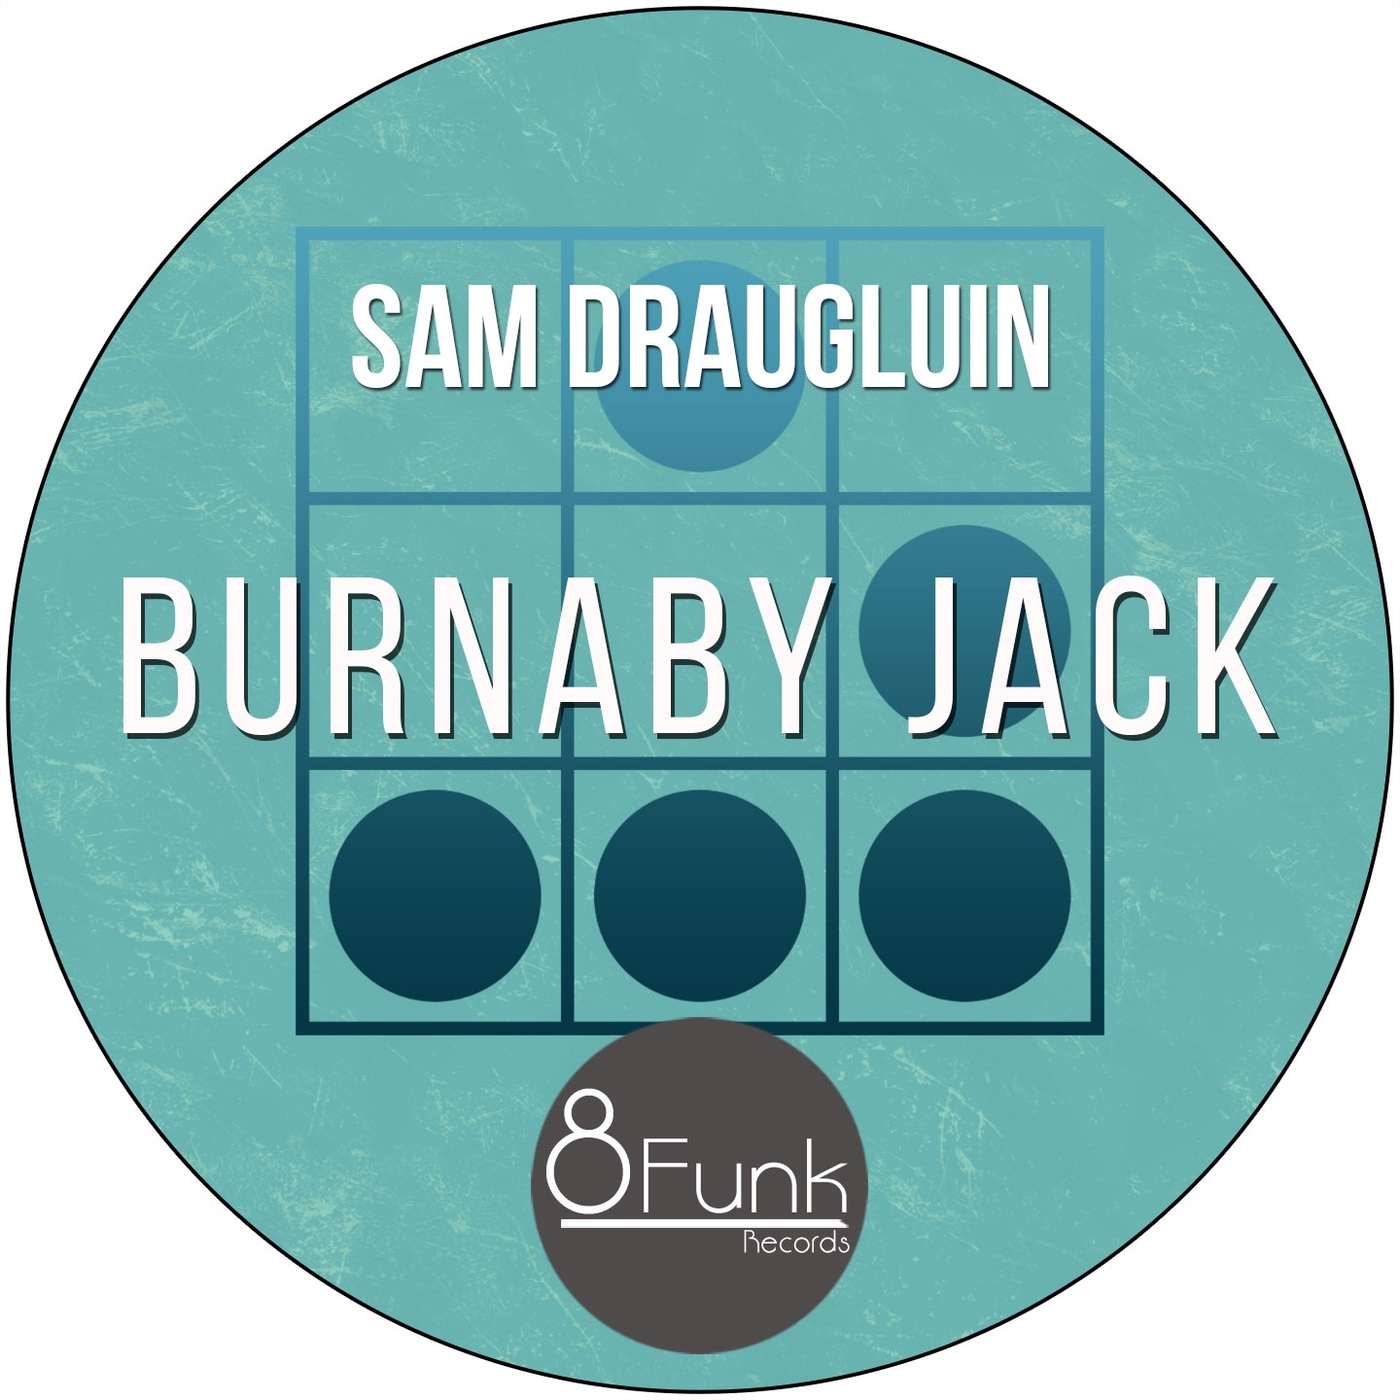 Sam Draugluin - Burnaby Jack / 8Funk Records